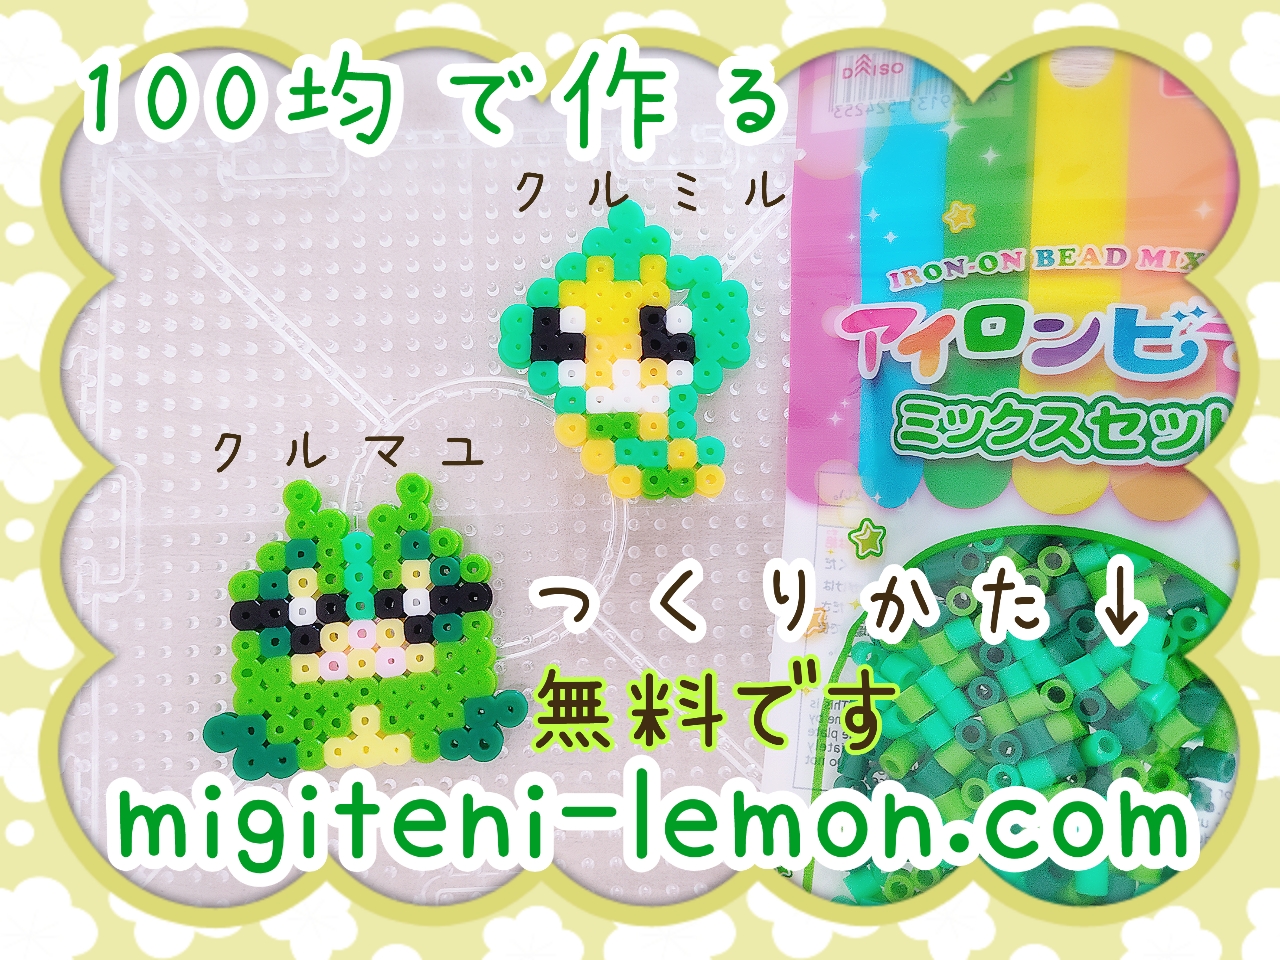 kurumiru-sewaddle-kurumayu-swadloon-pokemon-handmade-iron-beads-free-zuan-daiso-kawaii-green-small-square